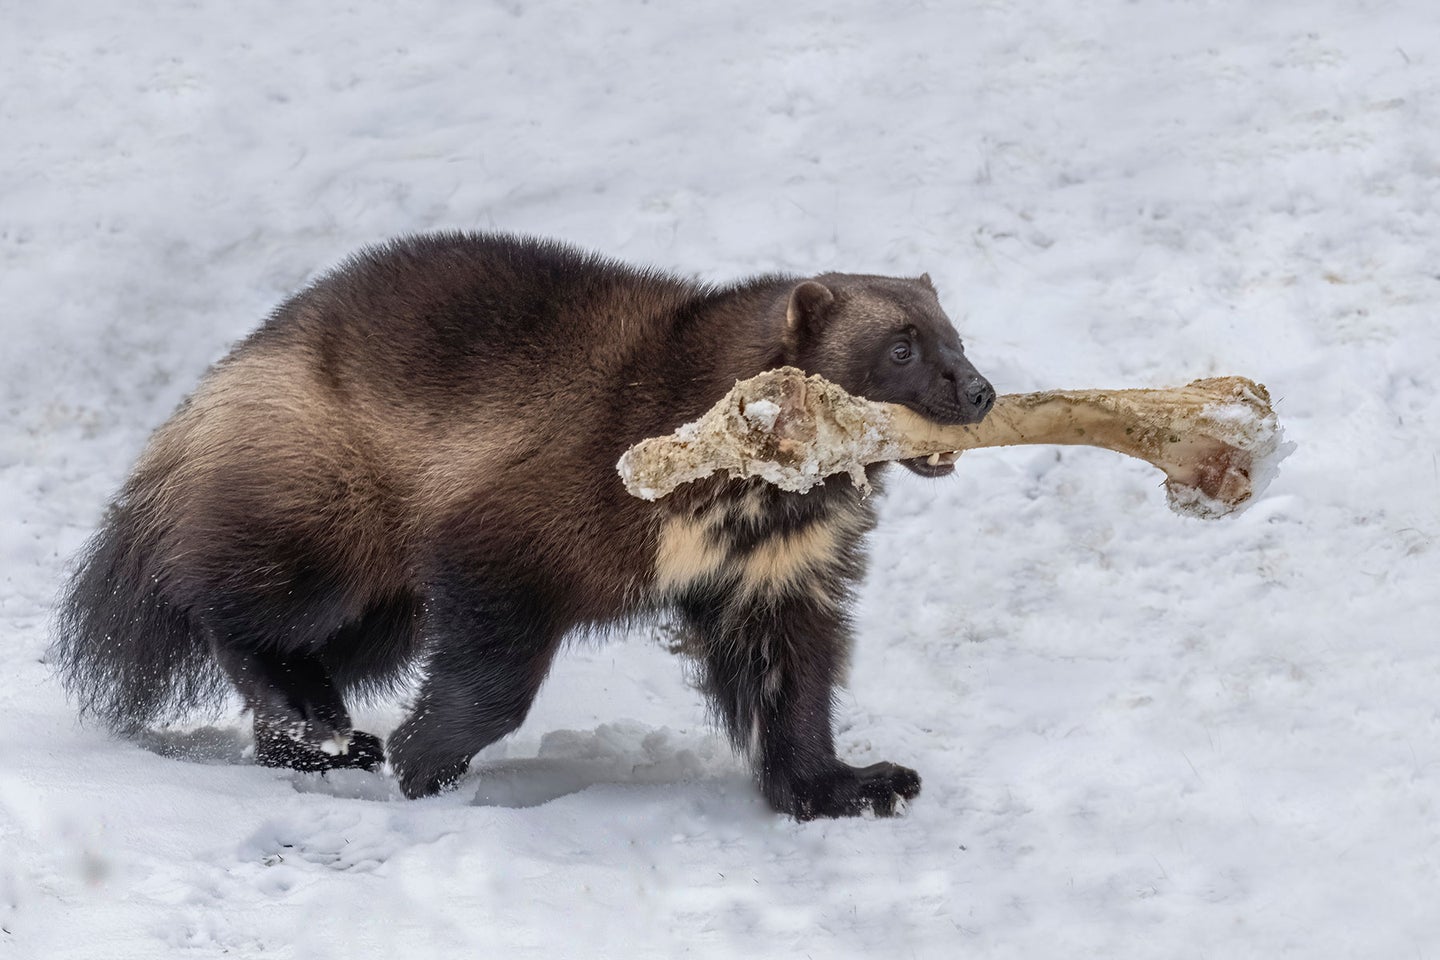 A wolverine carries a large bone through a snowy field.